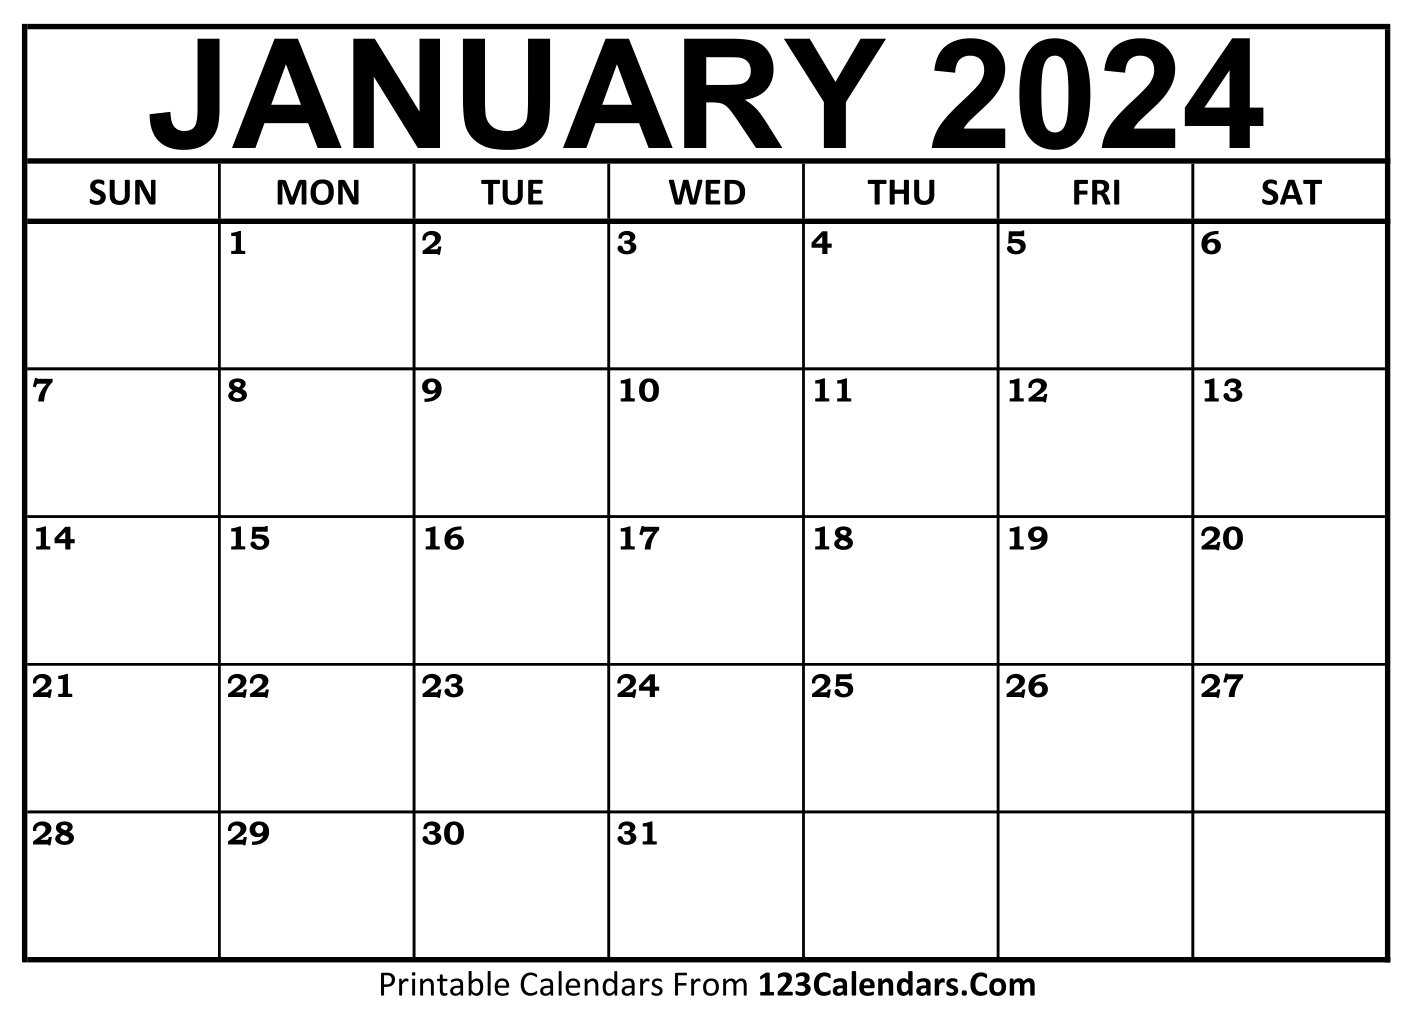 Printable January 2024 Calendar Templates - 123Calendars | 2024 Calendar Free Printable